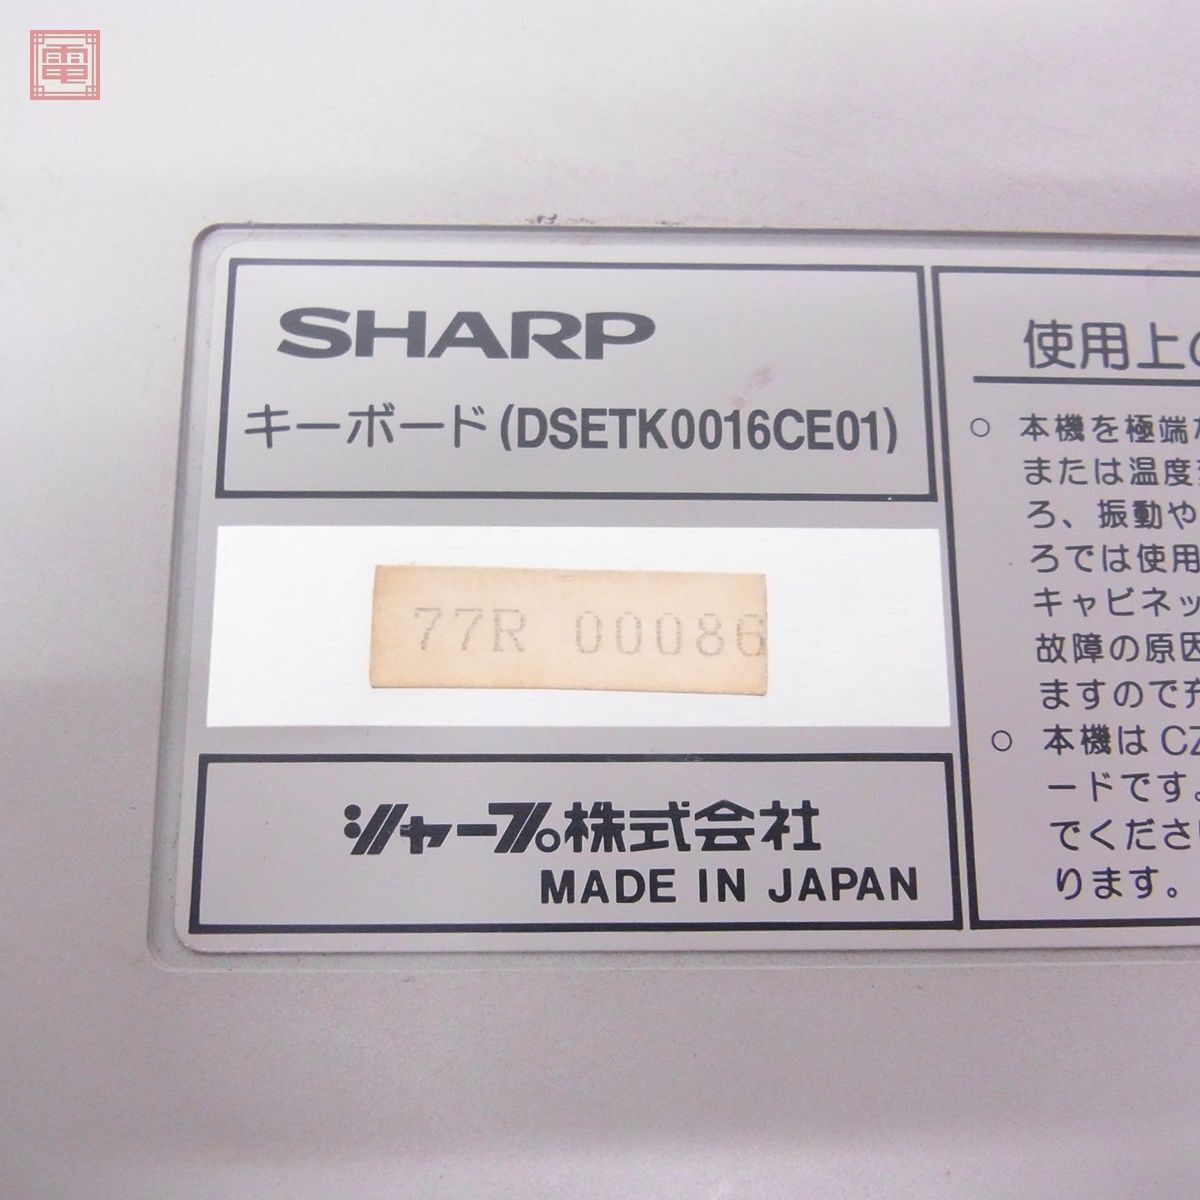  рабочий товар SHARP X68000 клавиатура DSETK0016CE01 офис серый sharp [20